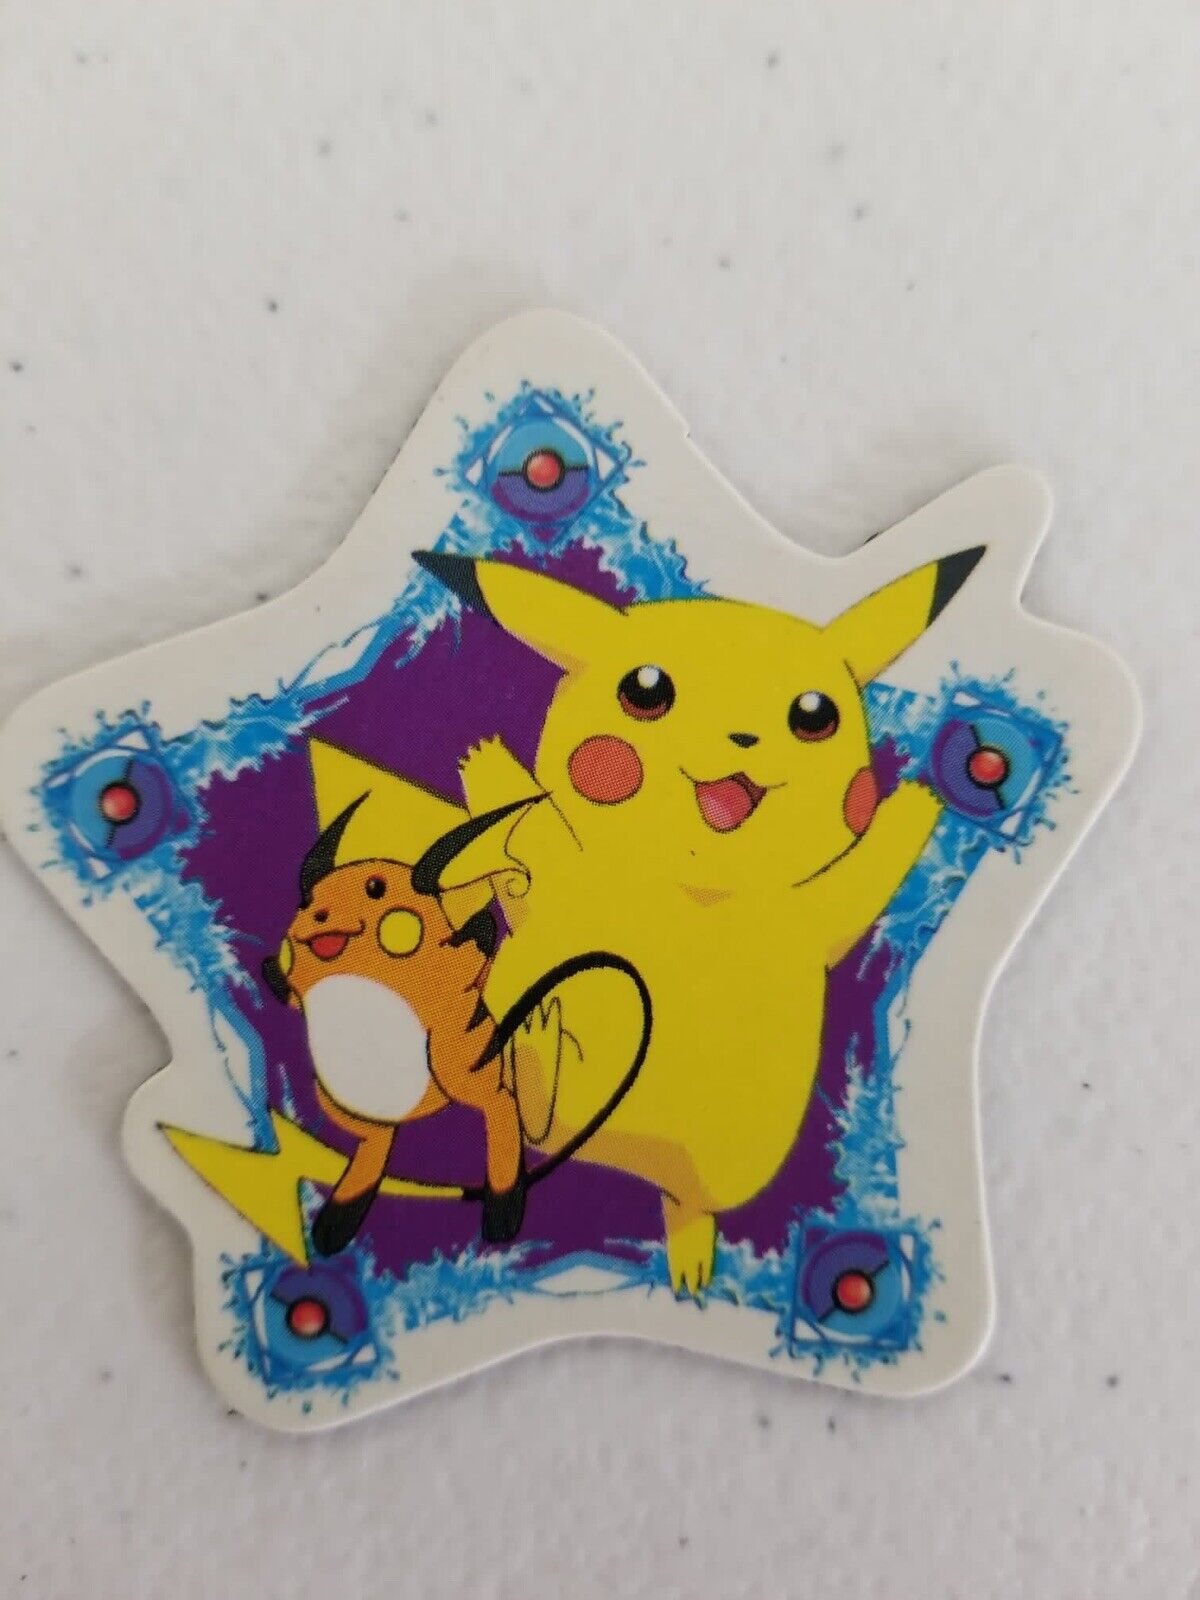 Vintage 1990s Pokémon Magnets - Complete Set of 24 with Pikachu, Charmander, Charizard, & More - TreasuTiques